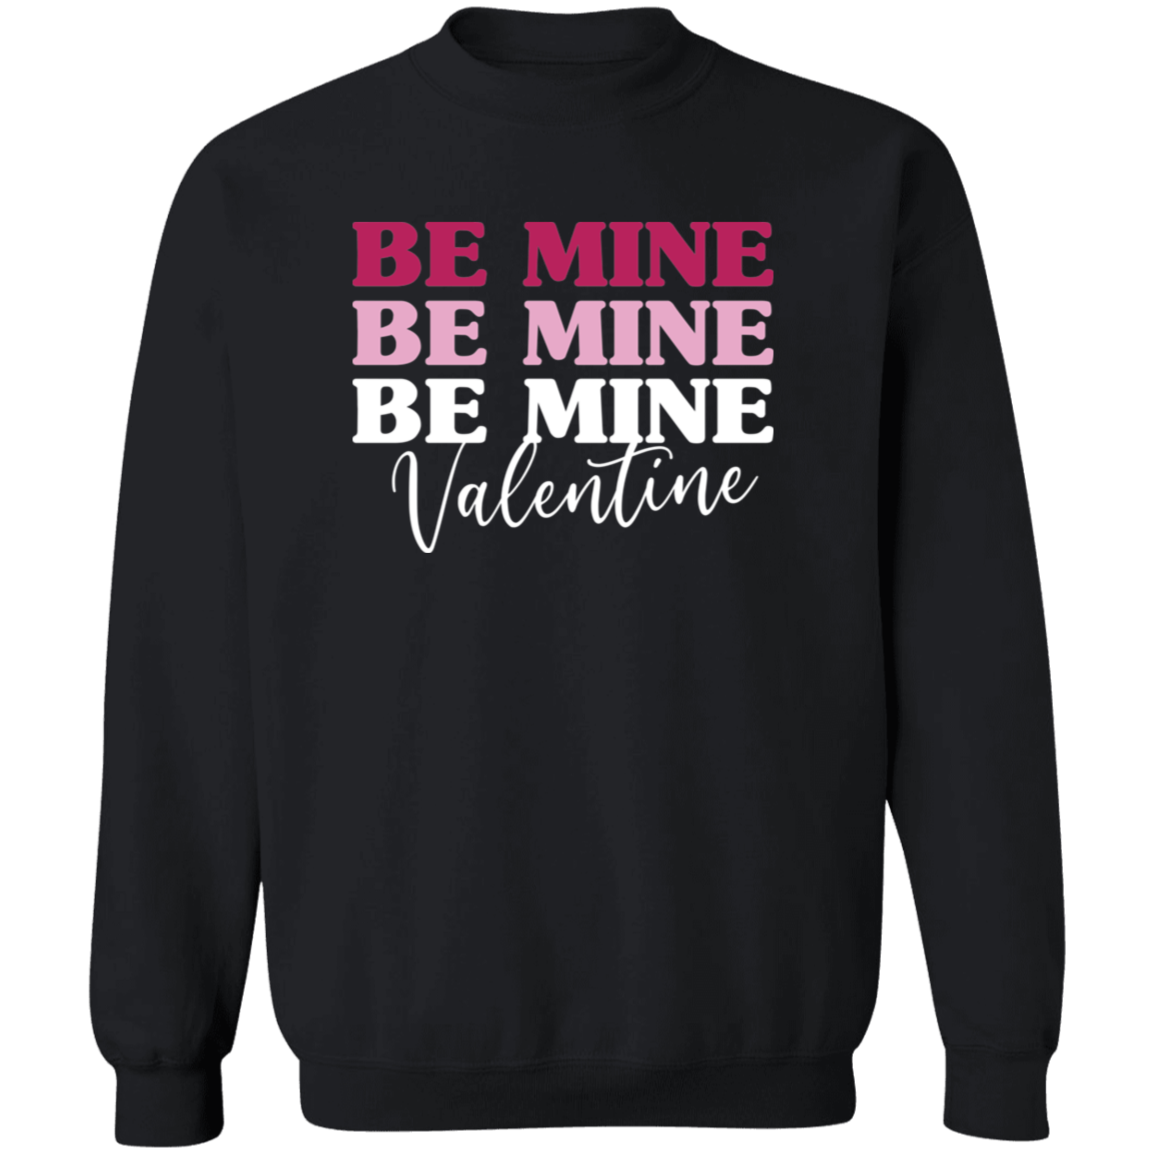 Be Mine Valentine Sweatshirt